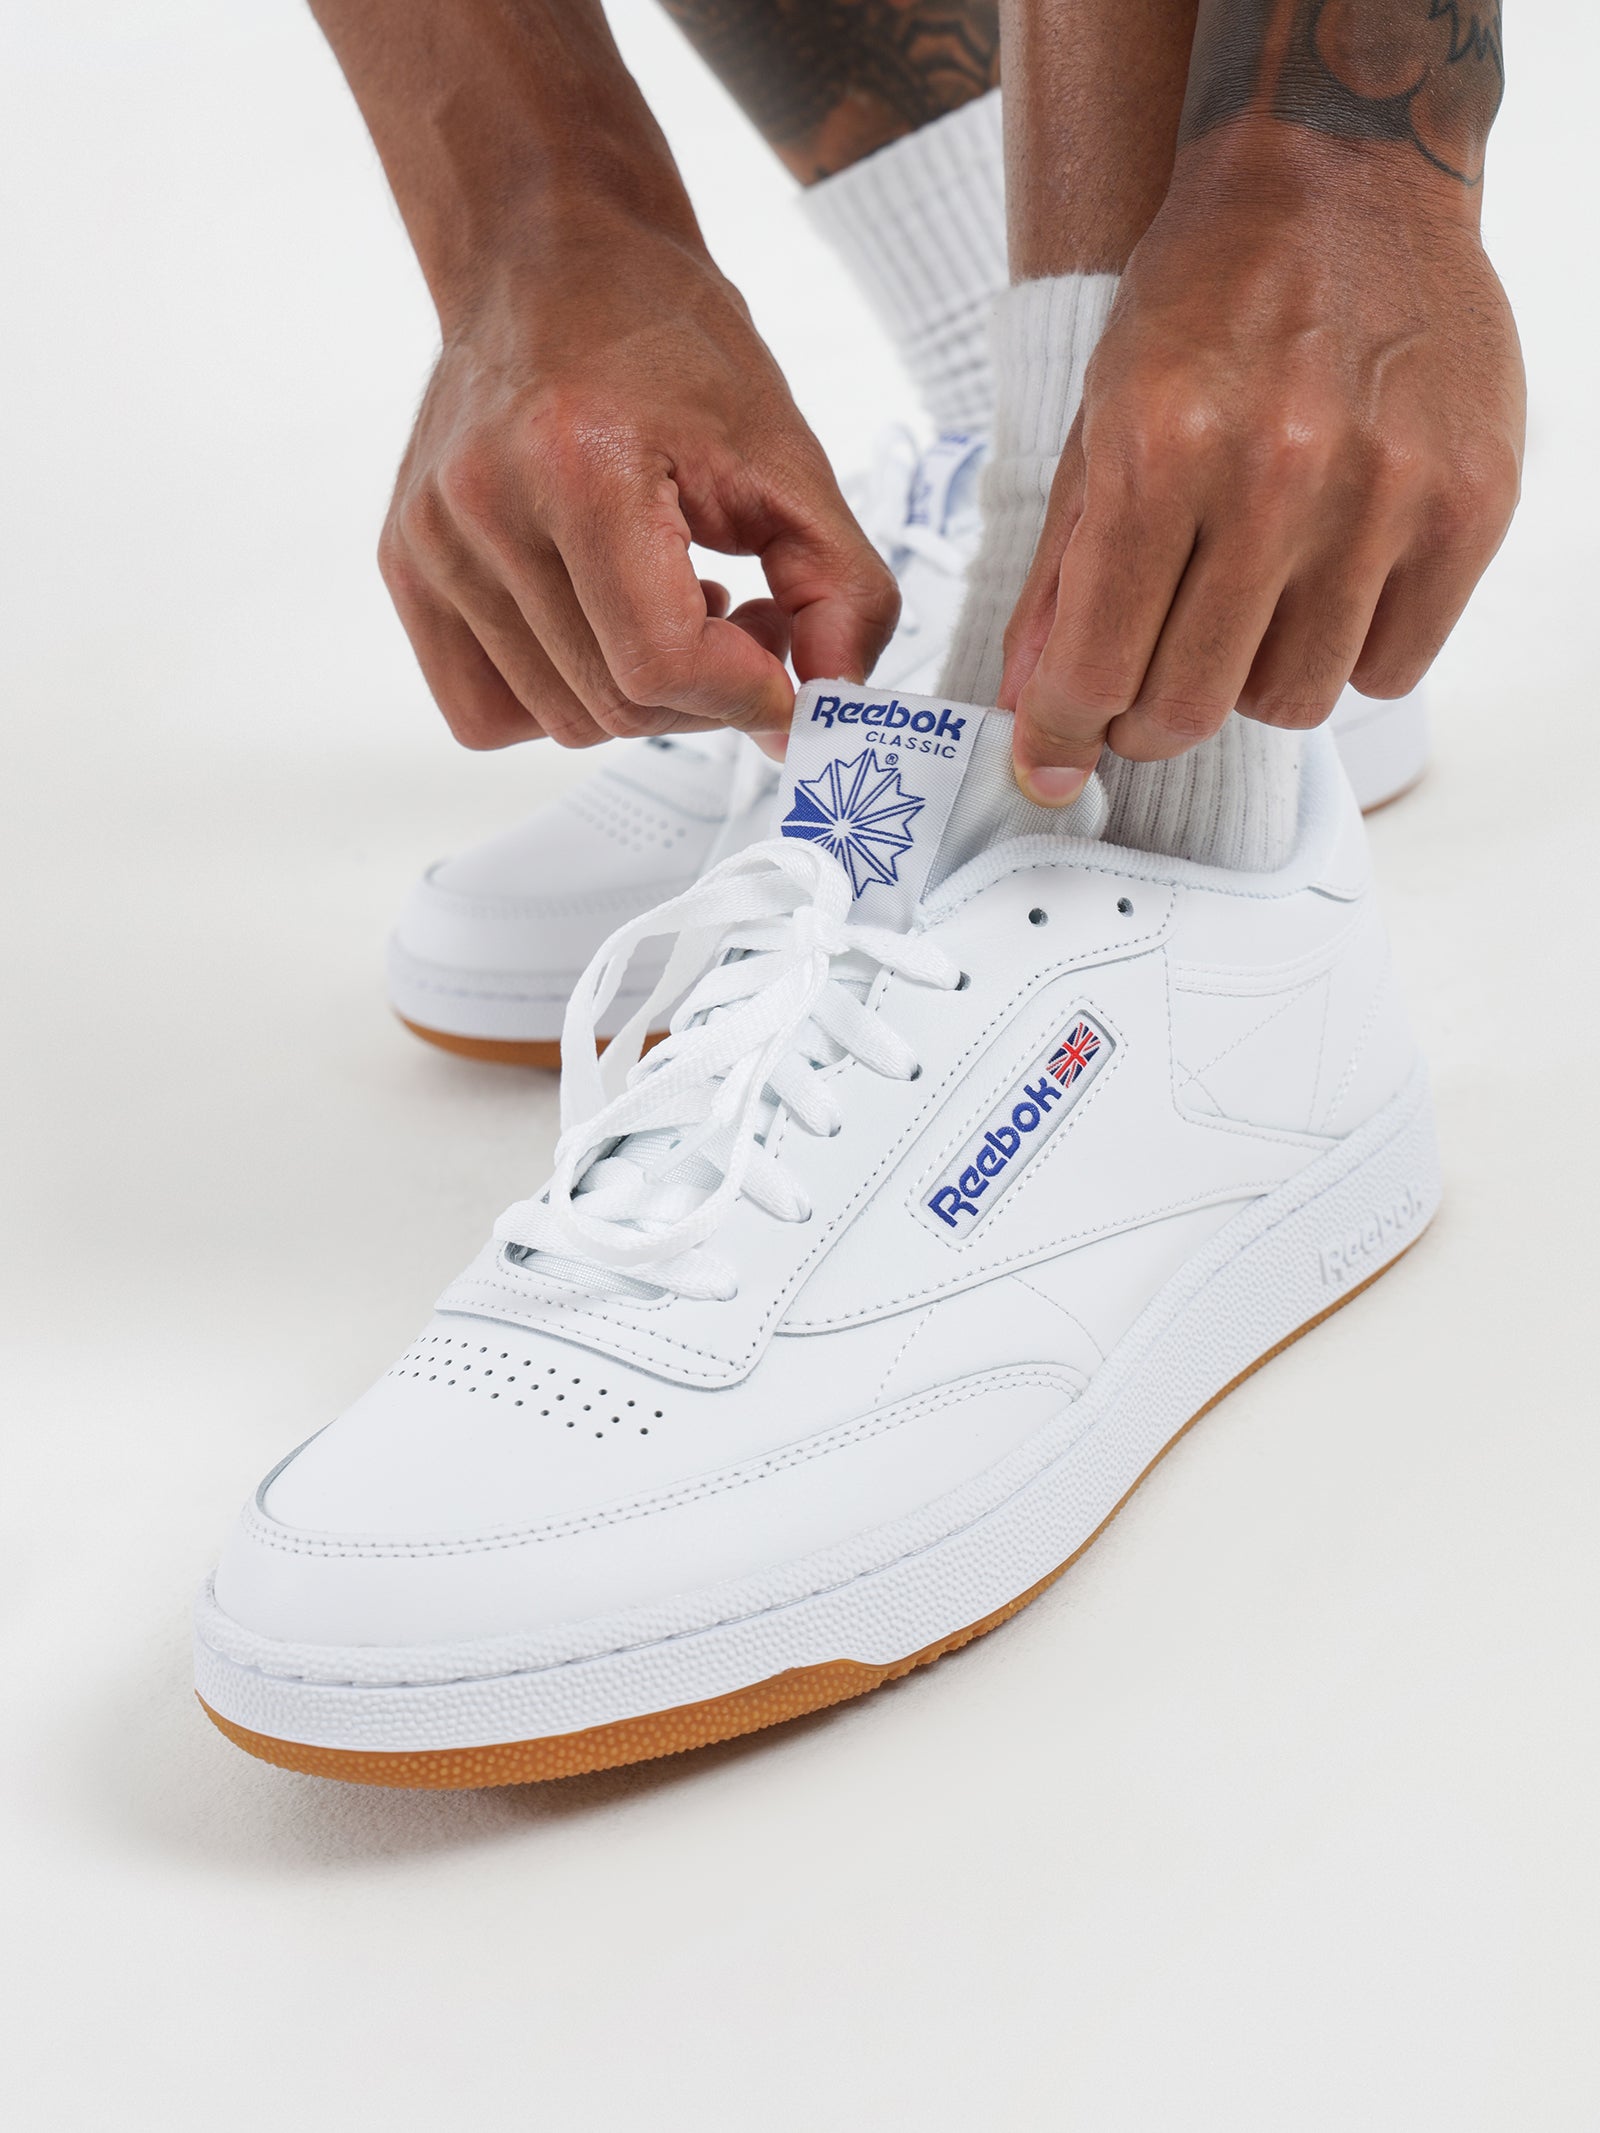 C 85 Sneakers in White & Blue - Glue